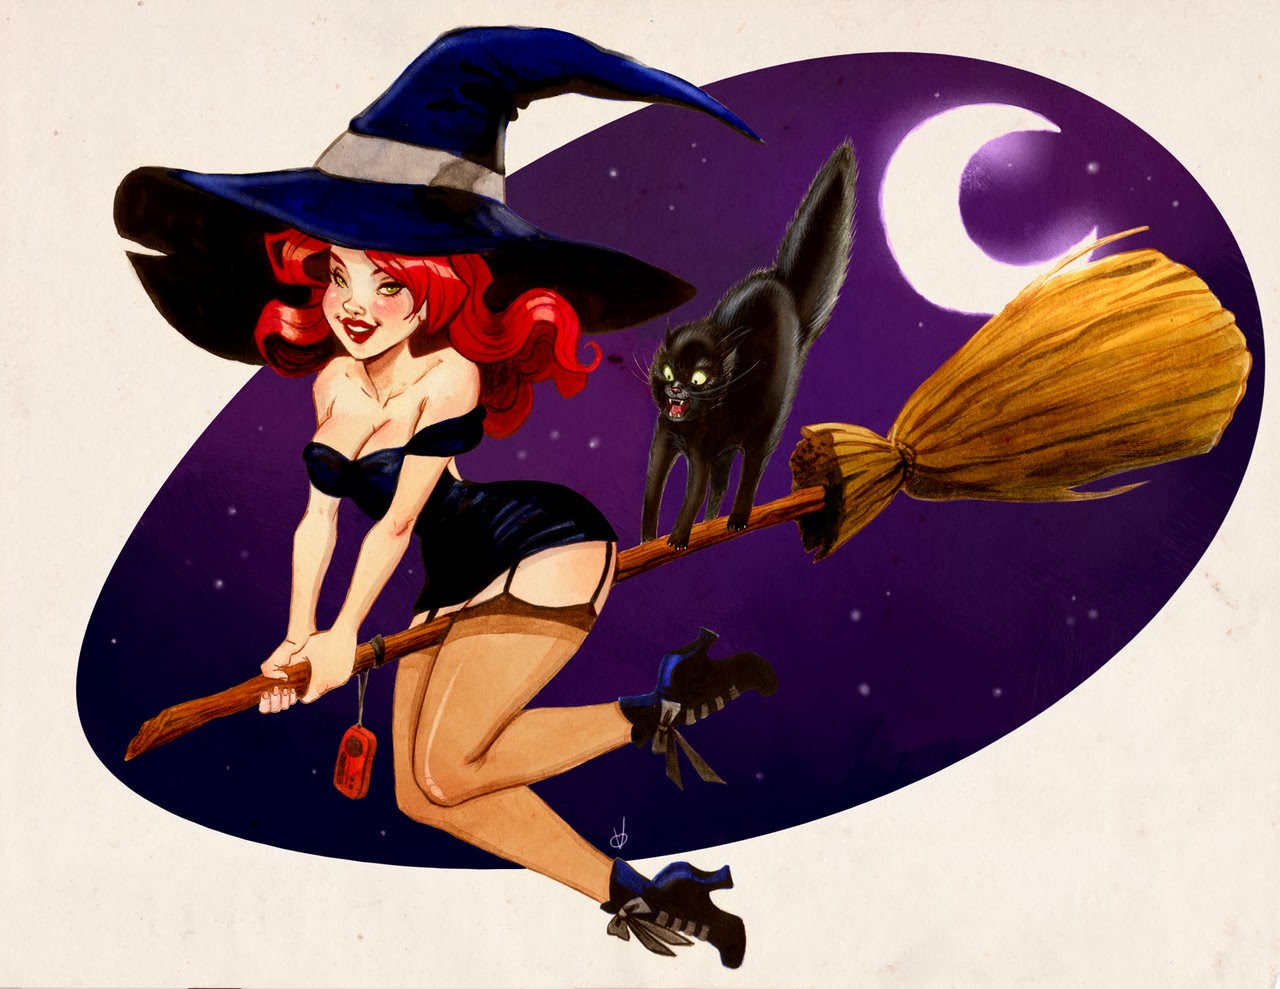 witch girls Halloween up cartoon sexy pin